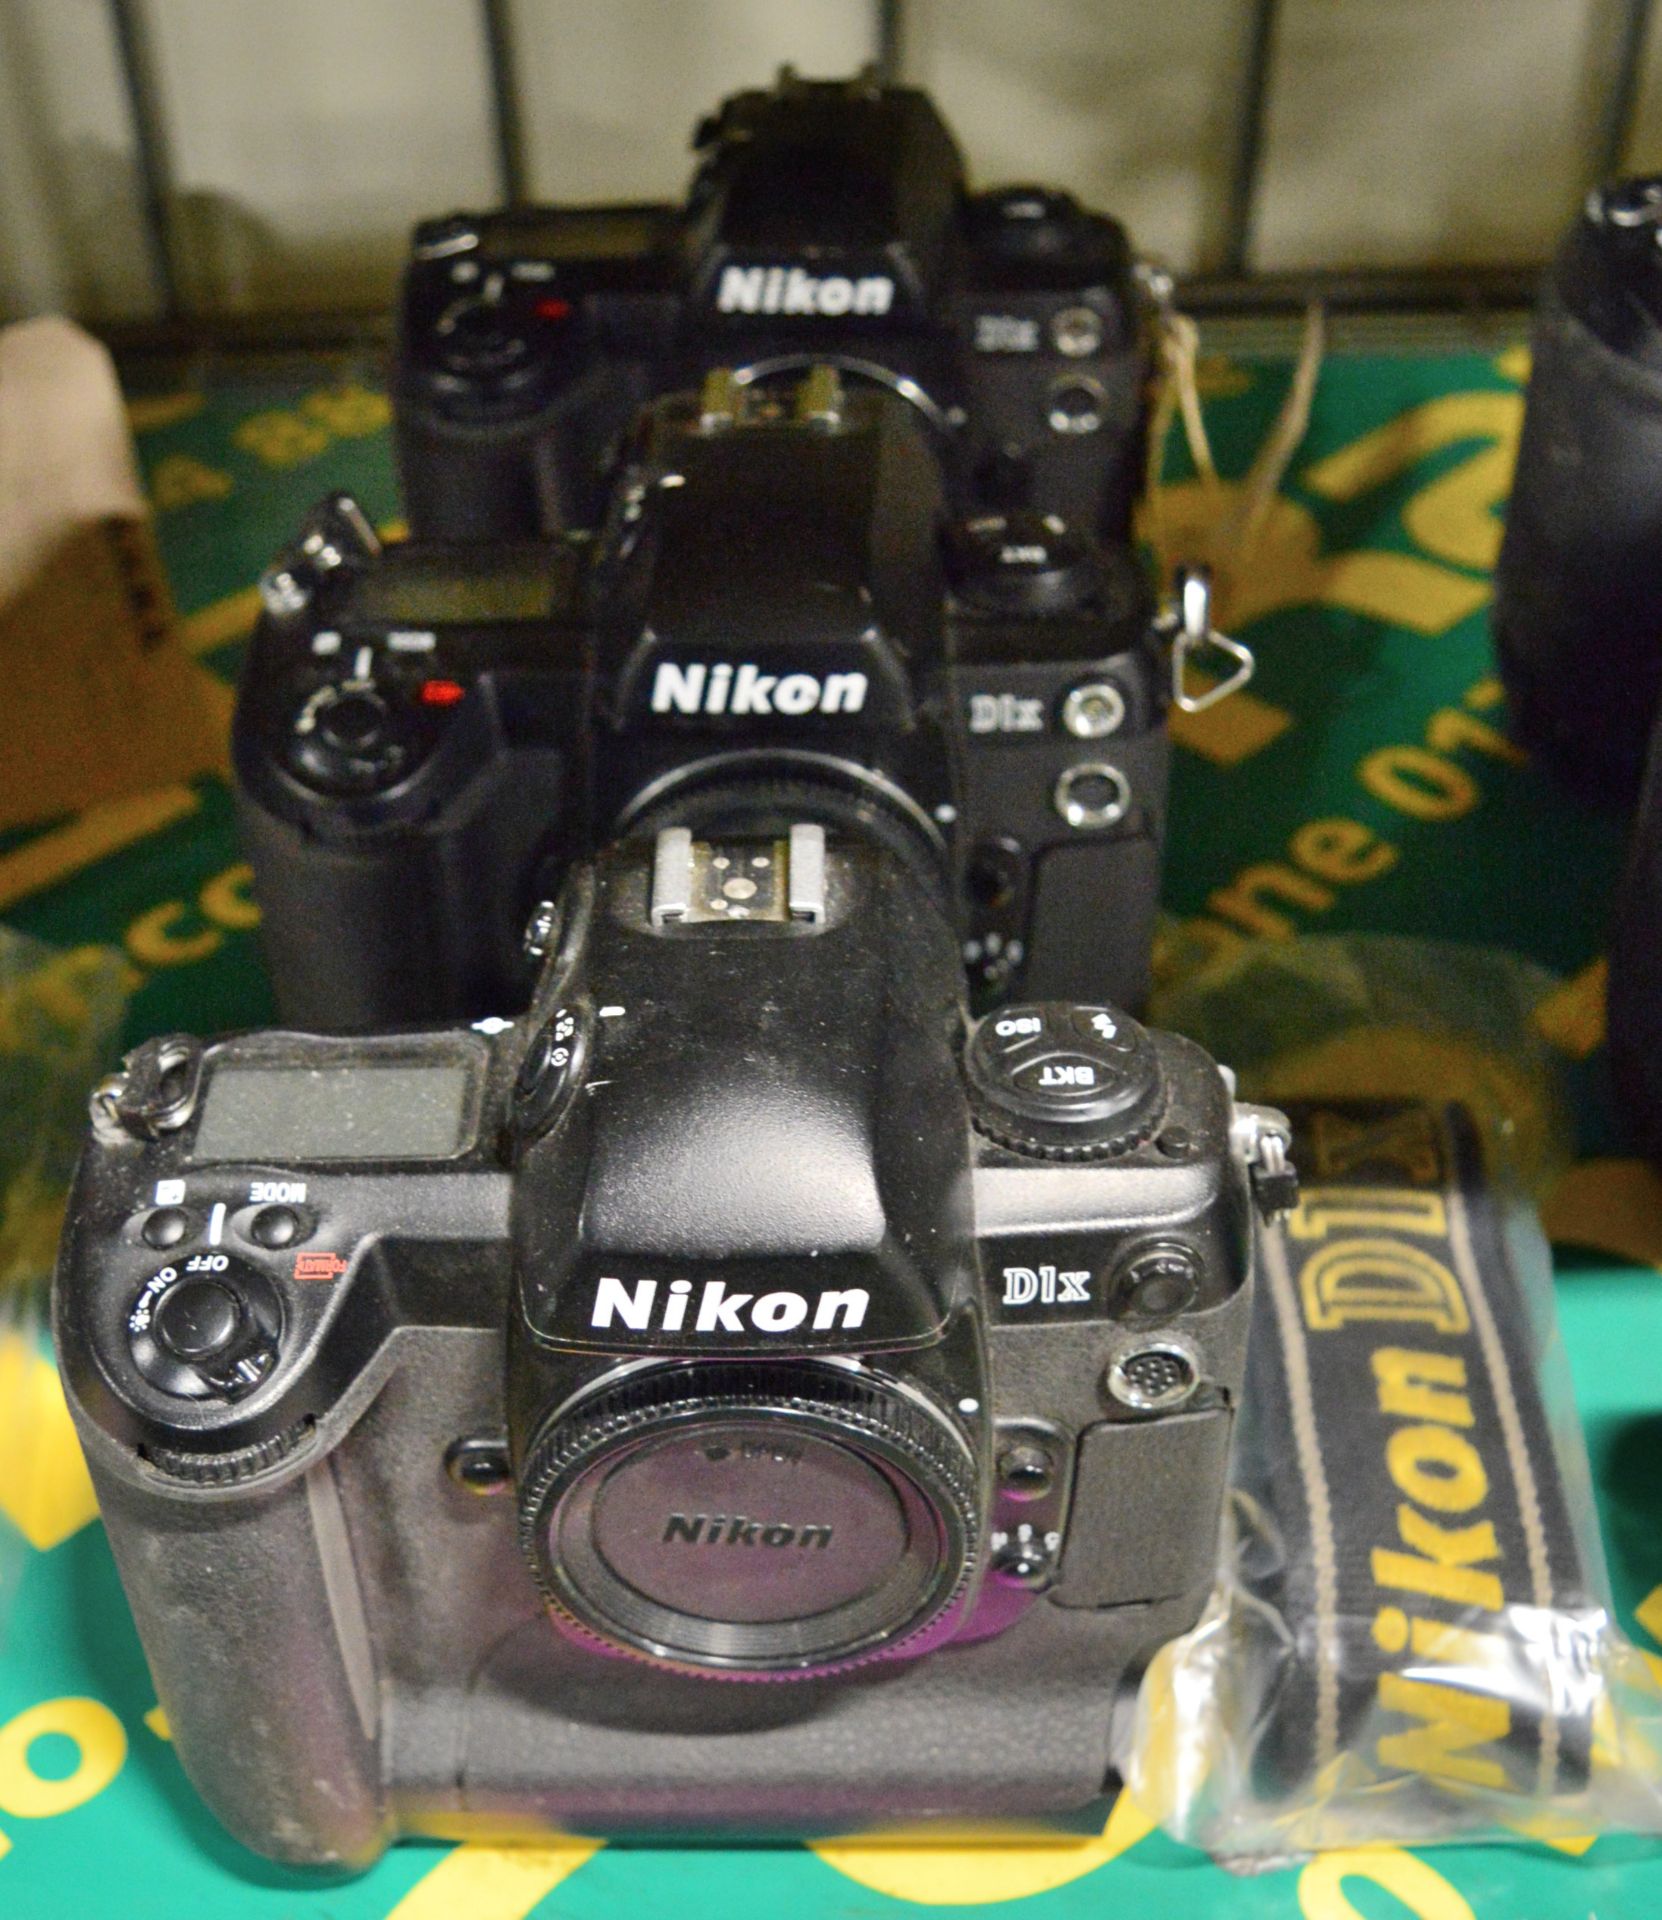 3x Nikon D1X Camera Bodies with Battery Boxes. Strap.